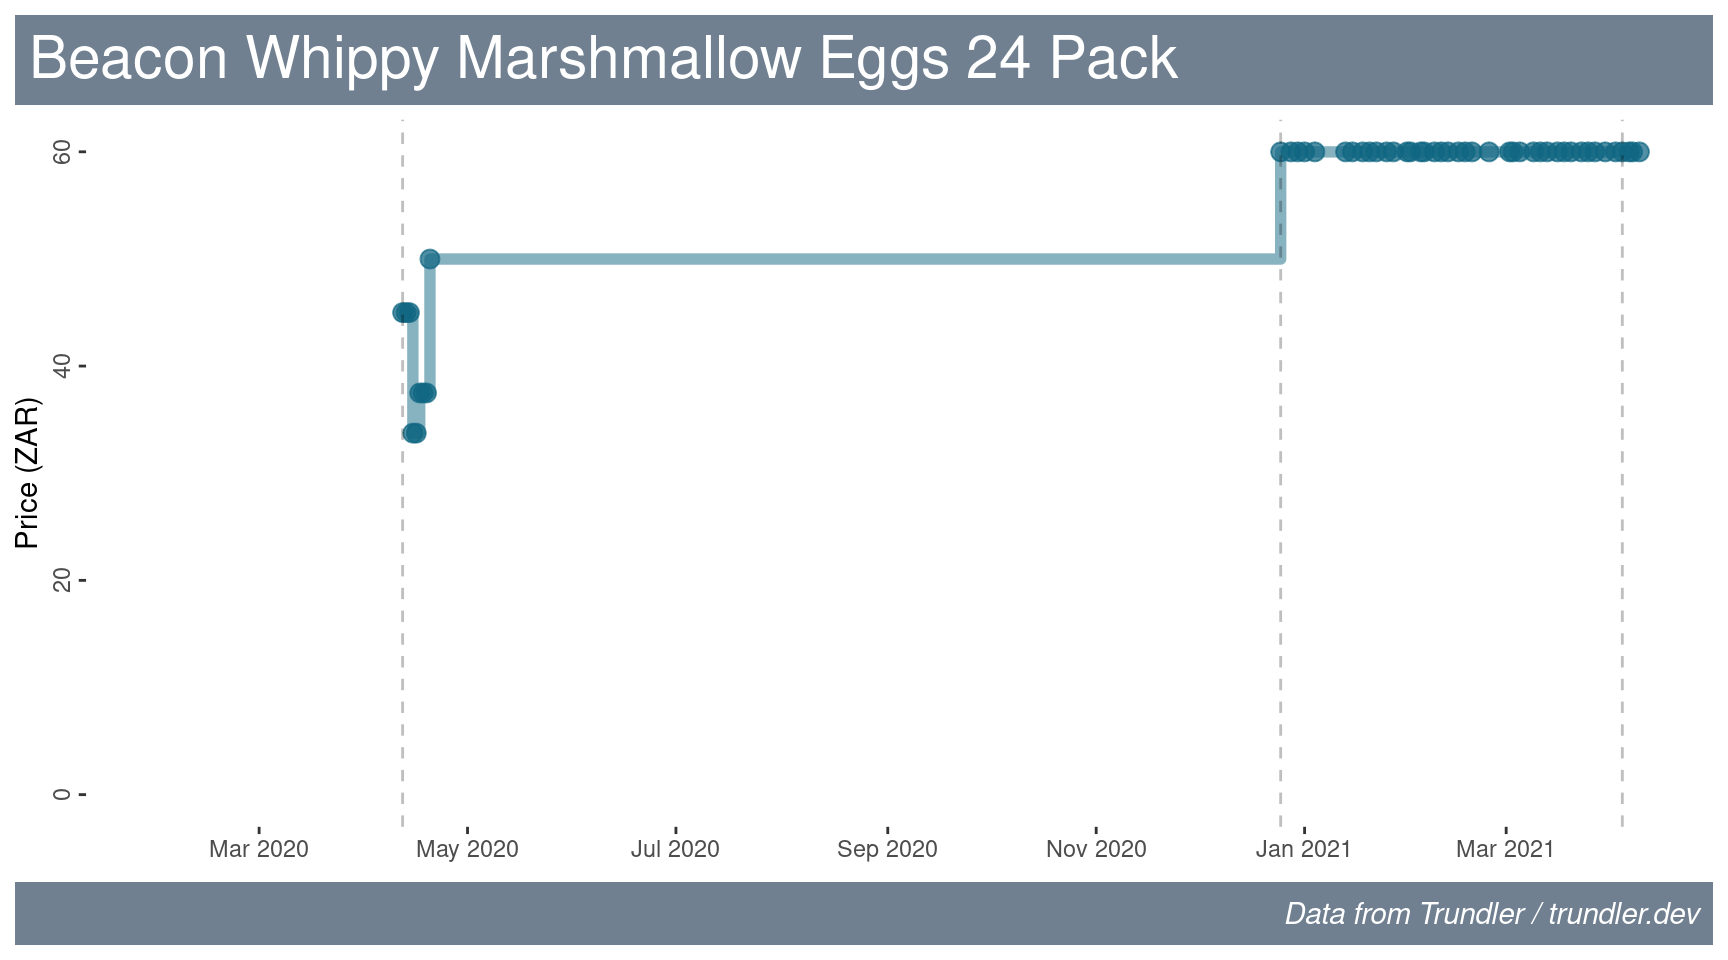 Price history for Beacon Whippy Marshmallow Eggs.